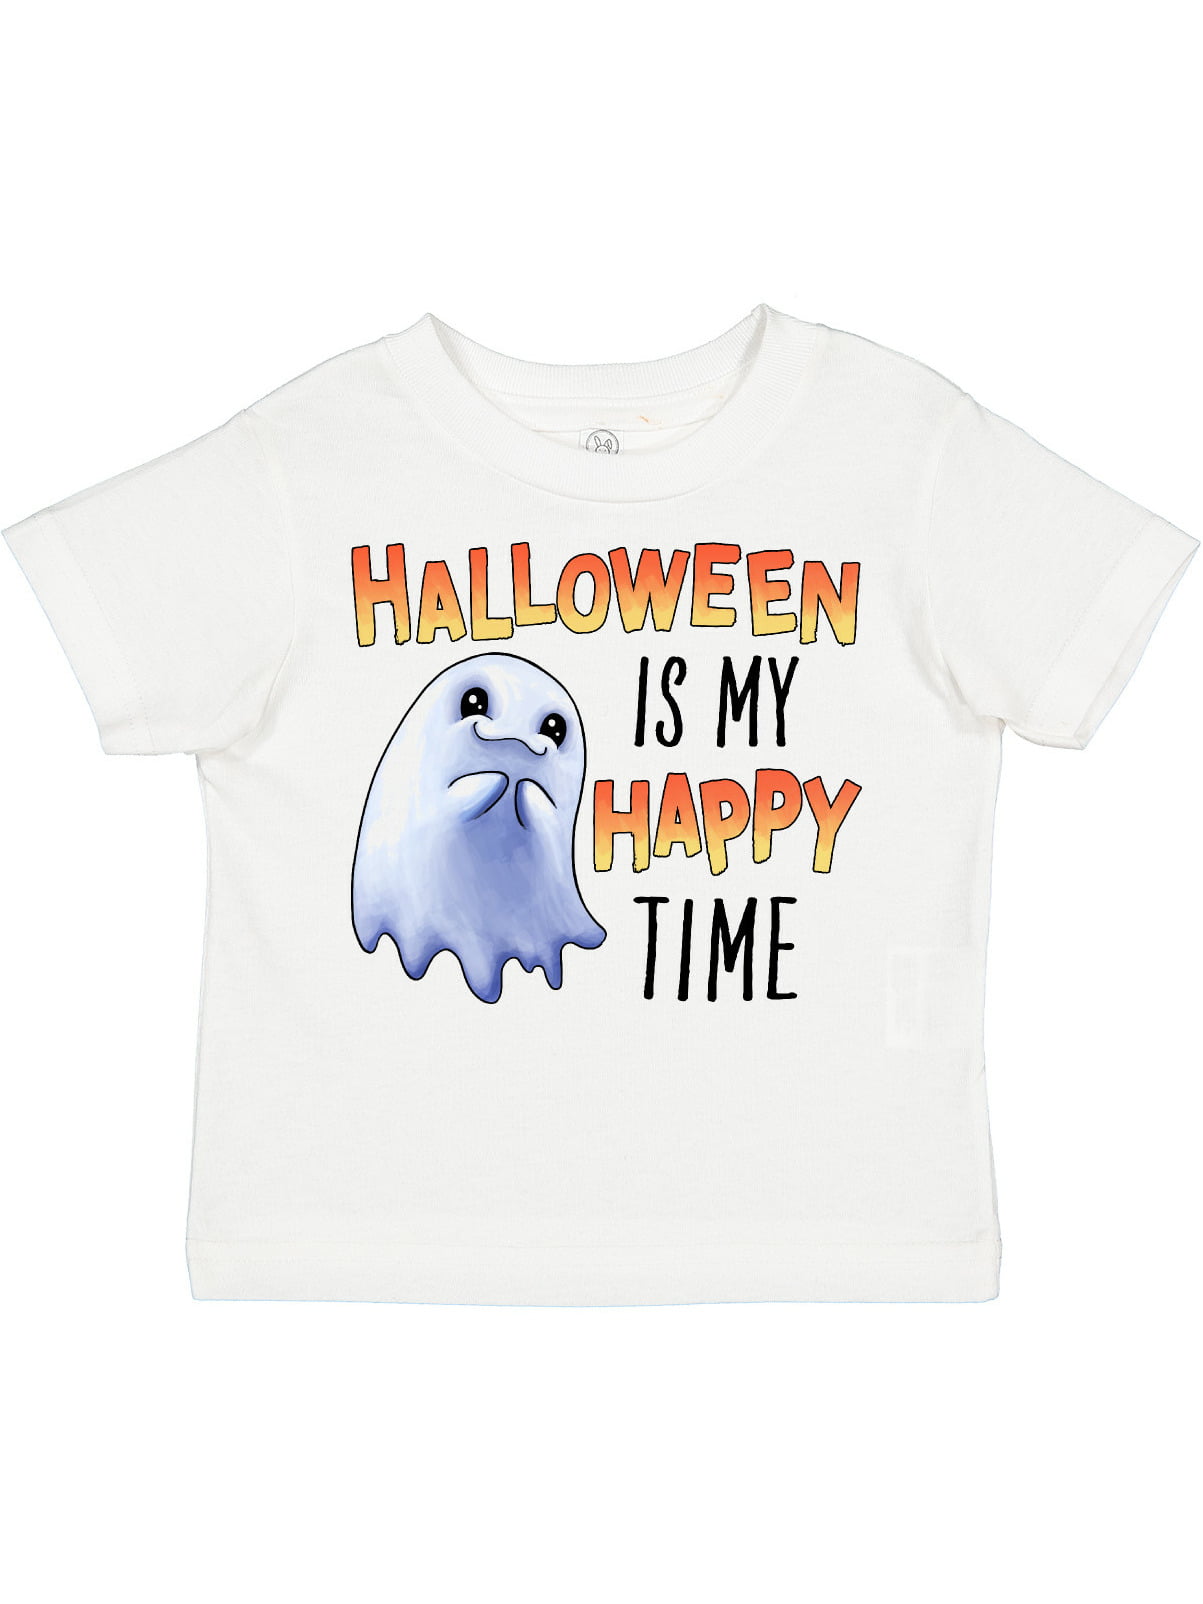 Ghoul Girl Shirt Ghost Shirt For Girls Girl Halloween Shirt I'm Daddy's Little Ghoul Shirt Toddler Girl Halloween Shirts For Girls